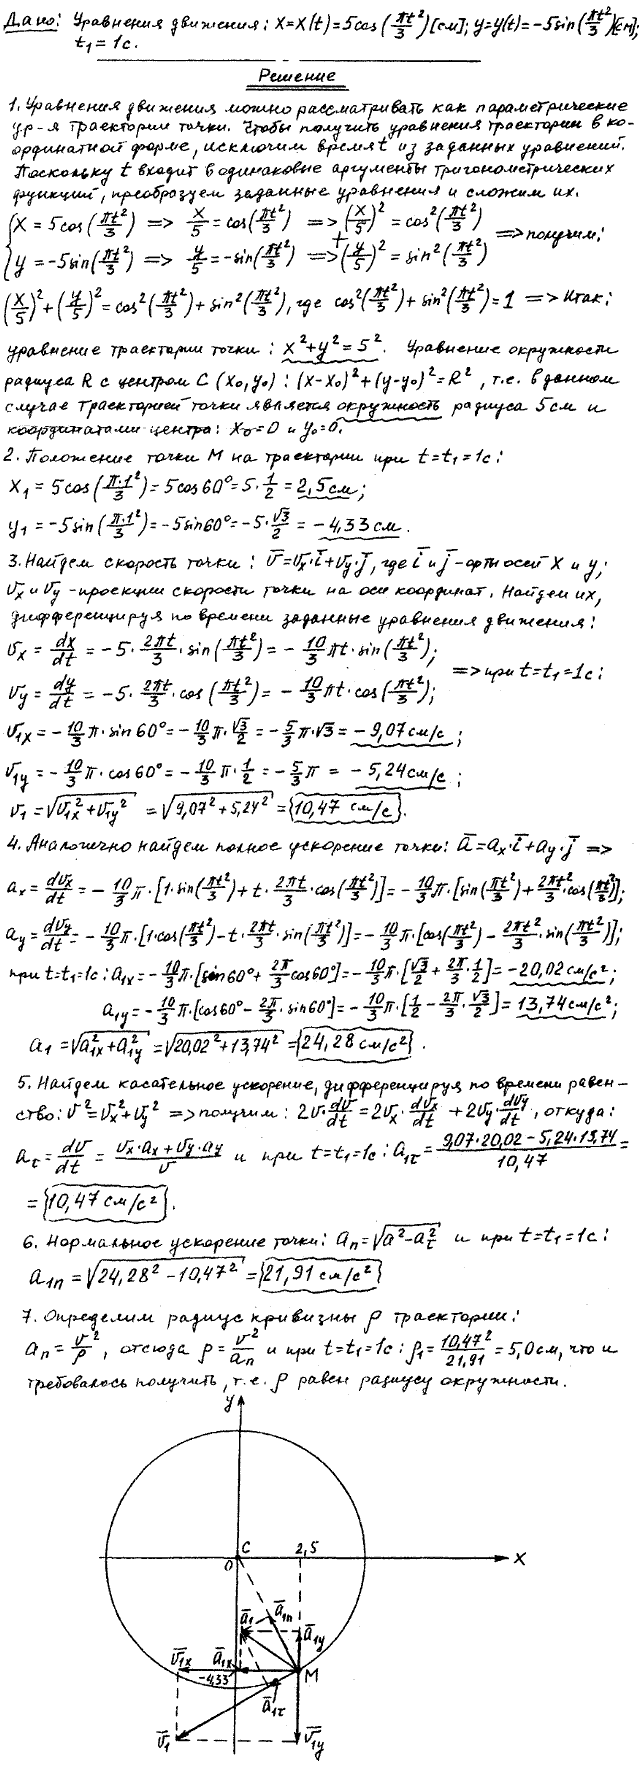 Задание К.1 вариант 13. x t)=5cos(πt^2/3), y(t)=-5sin(πt2/3, t1=1 с